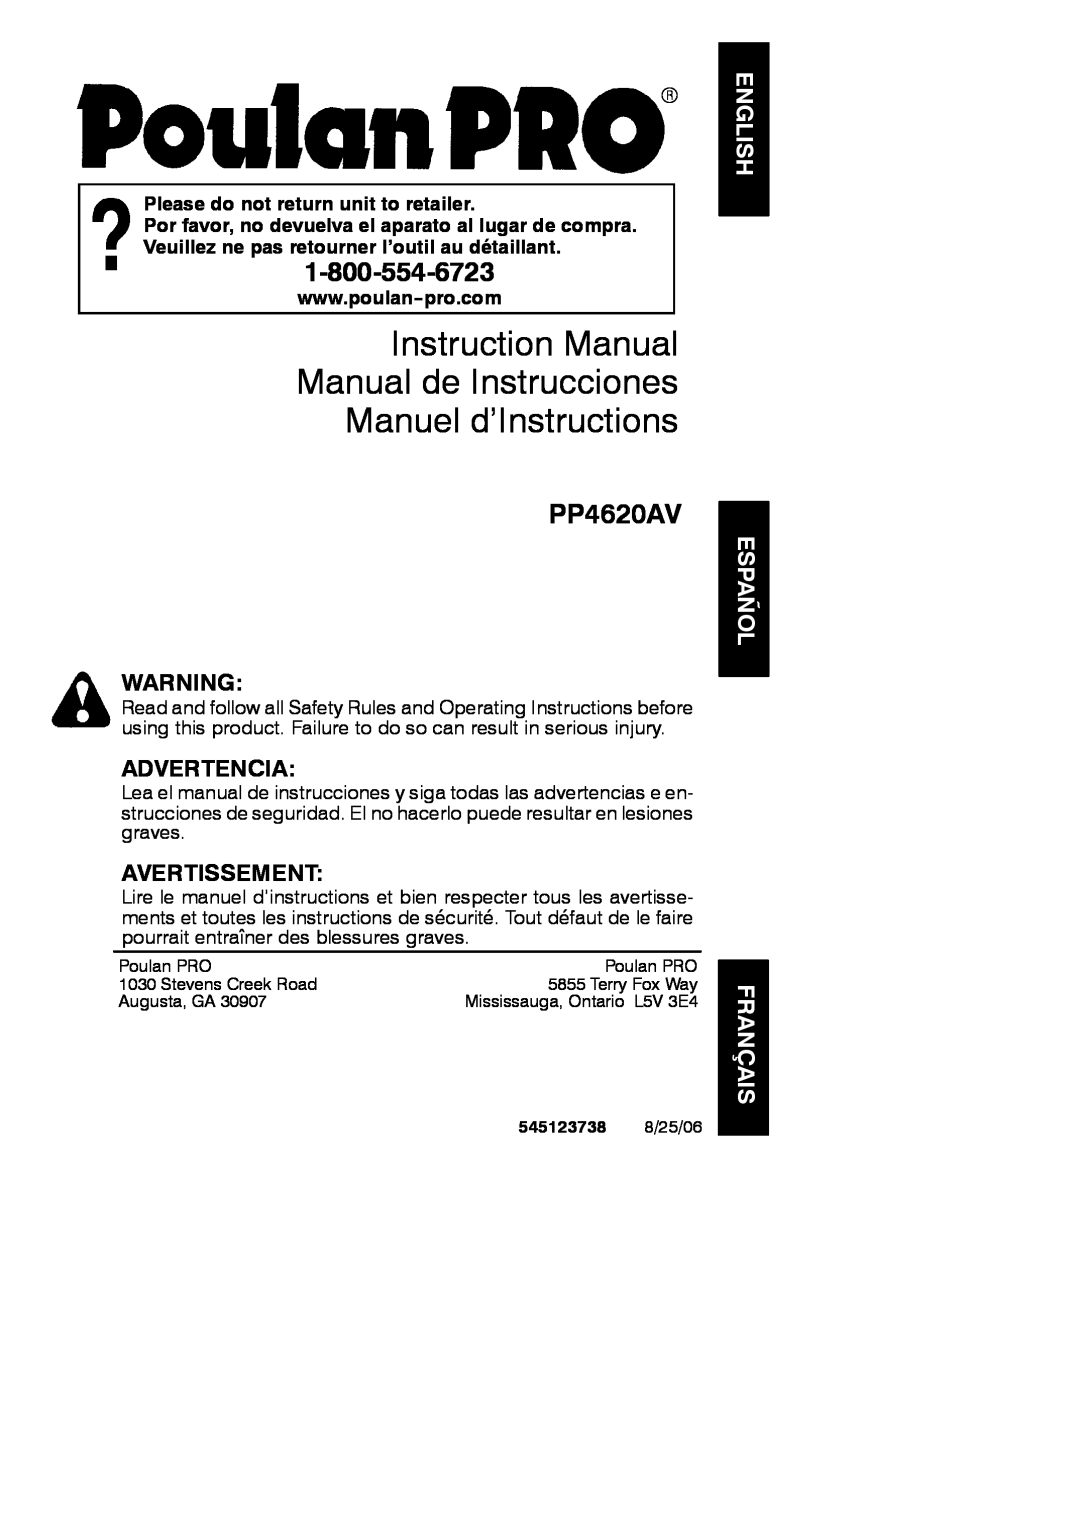 Poulan PP4620AV instruction manual English Español Français, Advertencia, Avertissement 